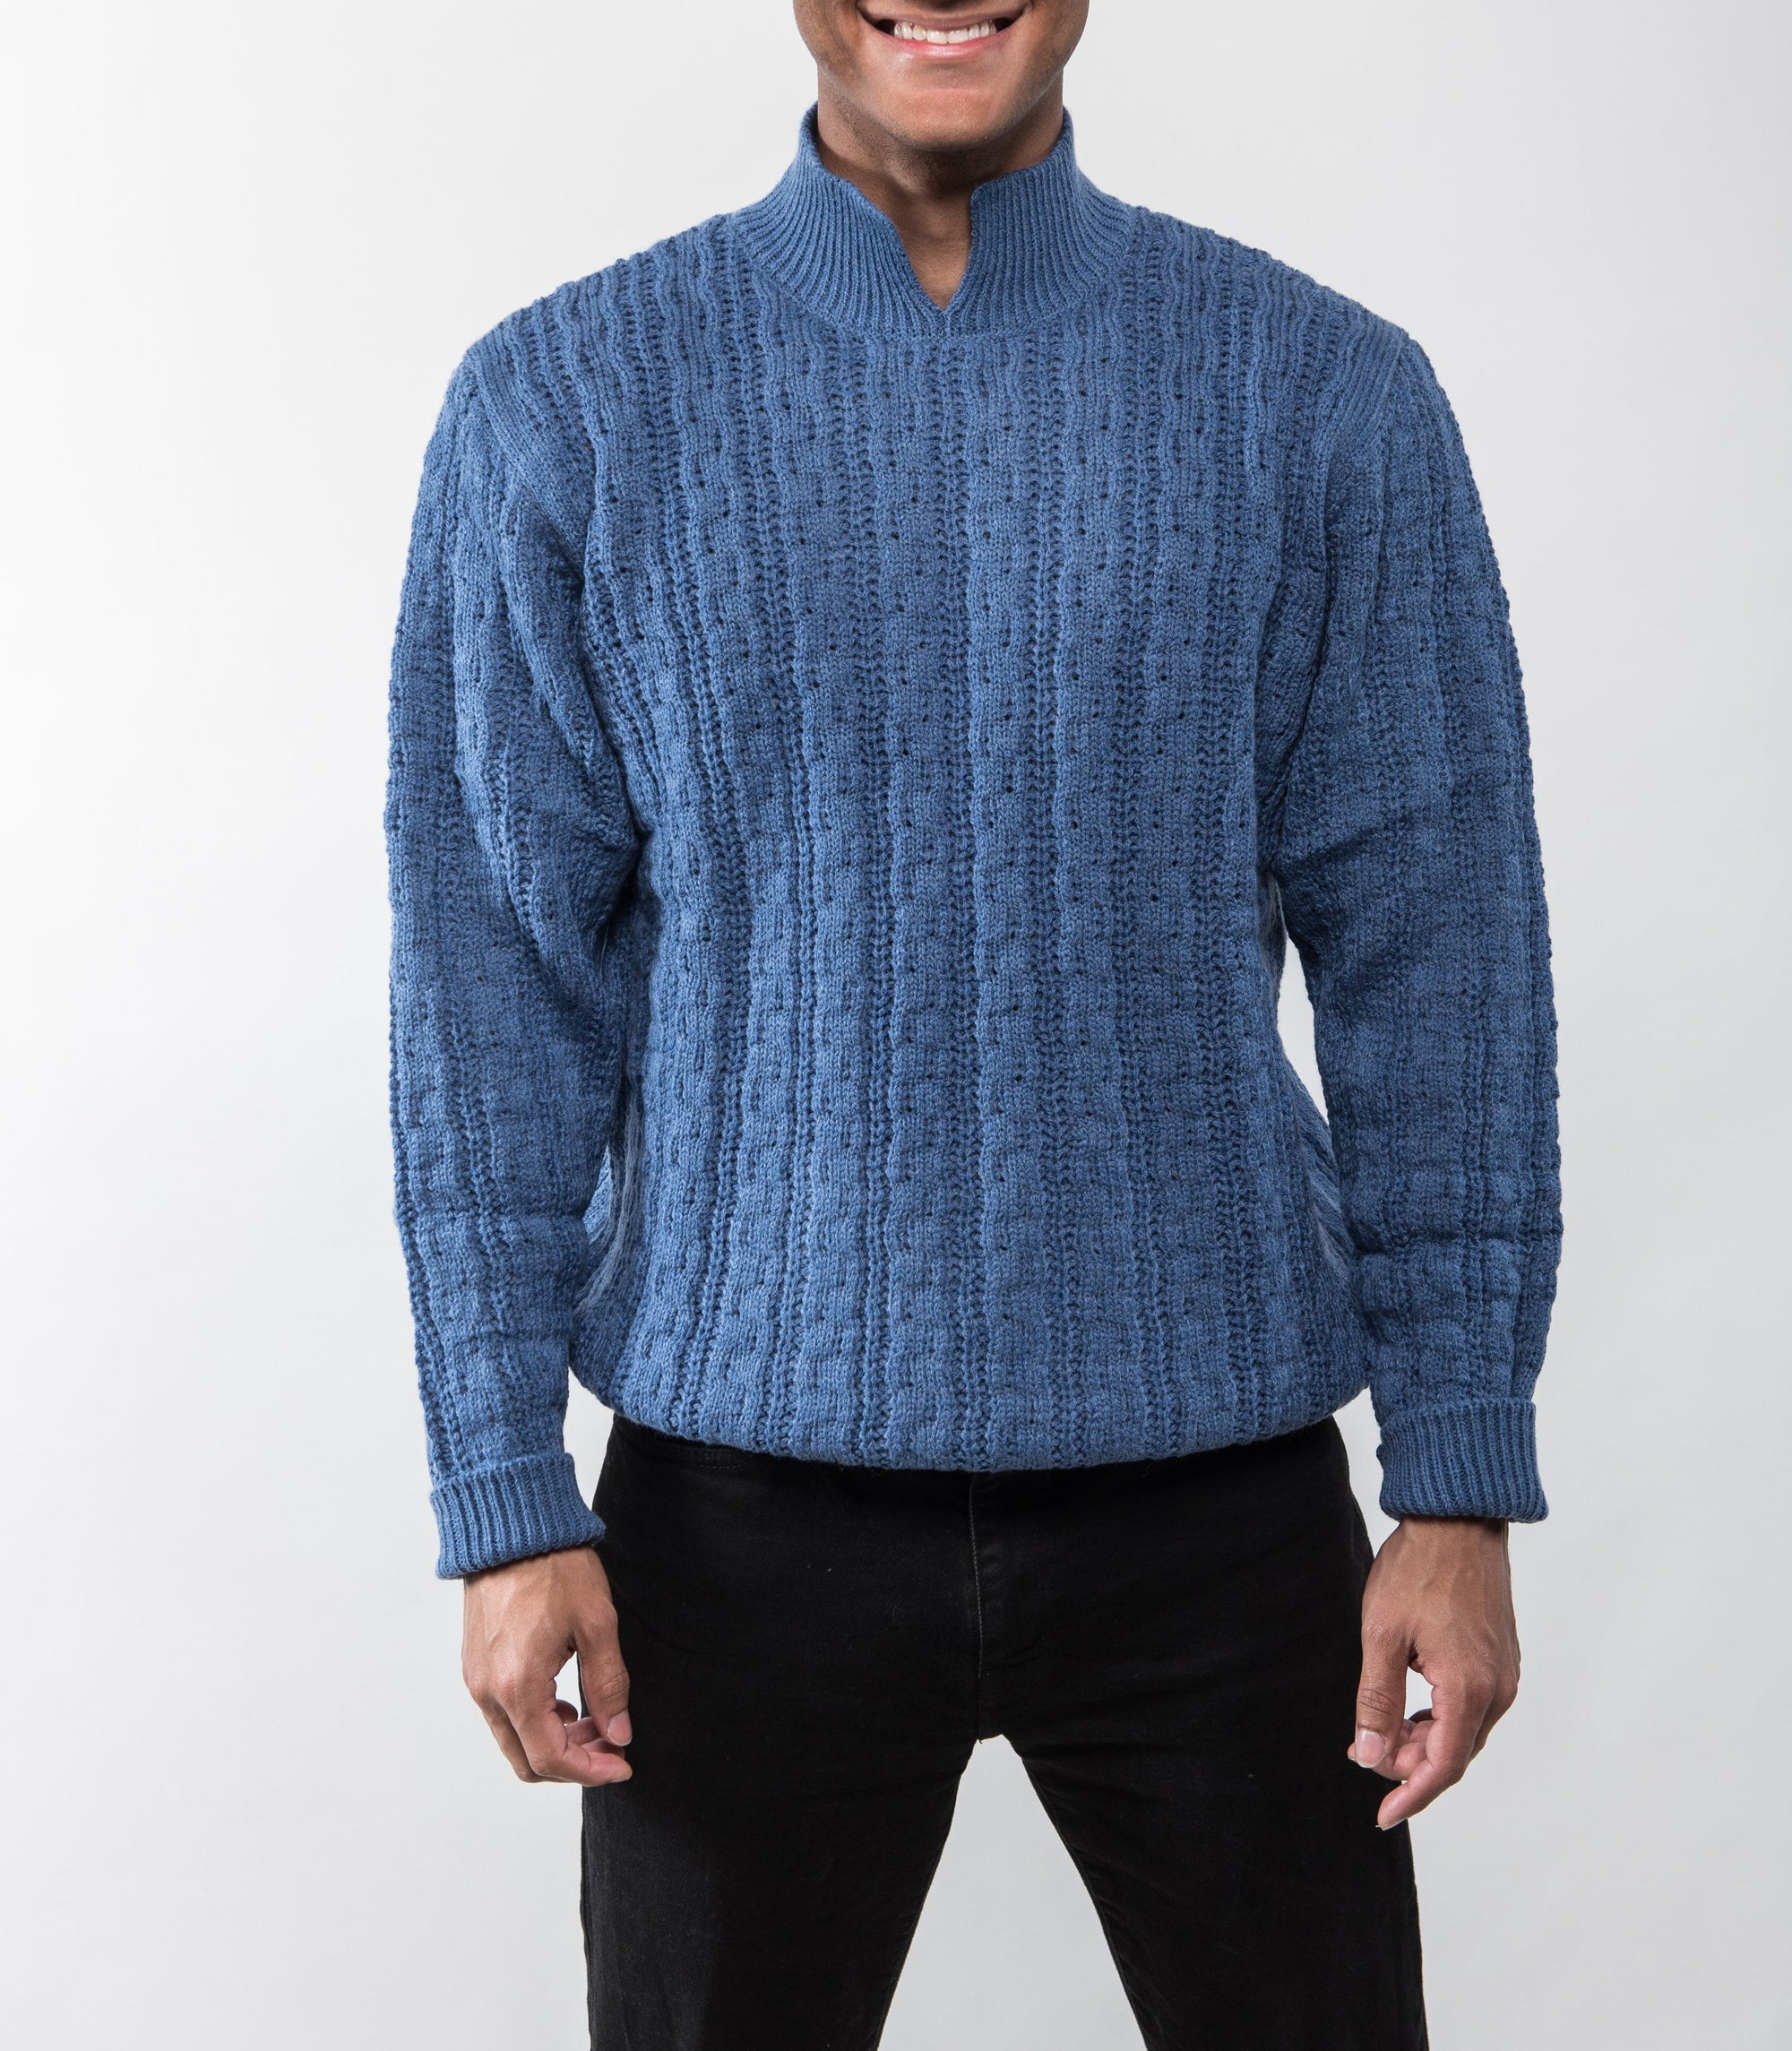 Jailhouse Rock Sweater